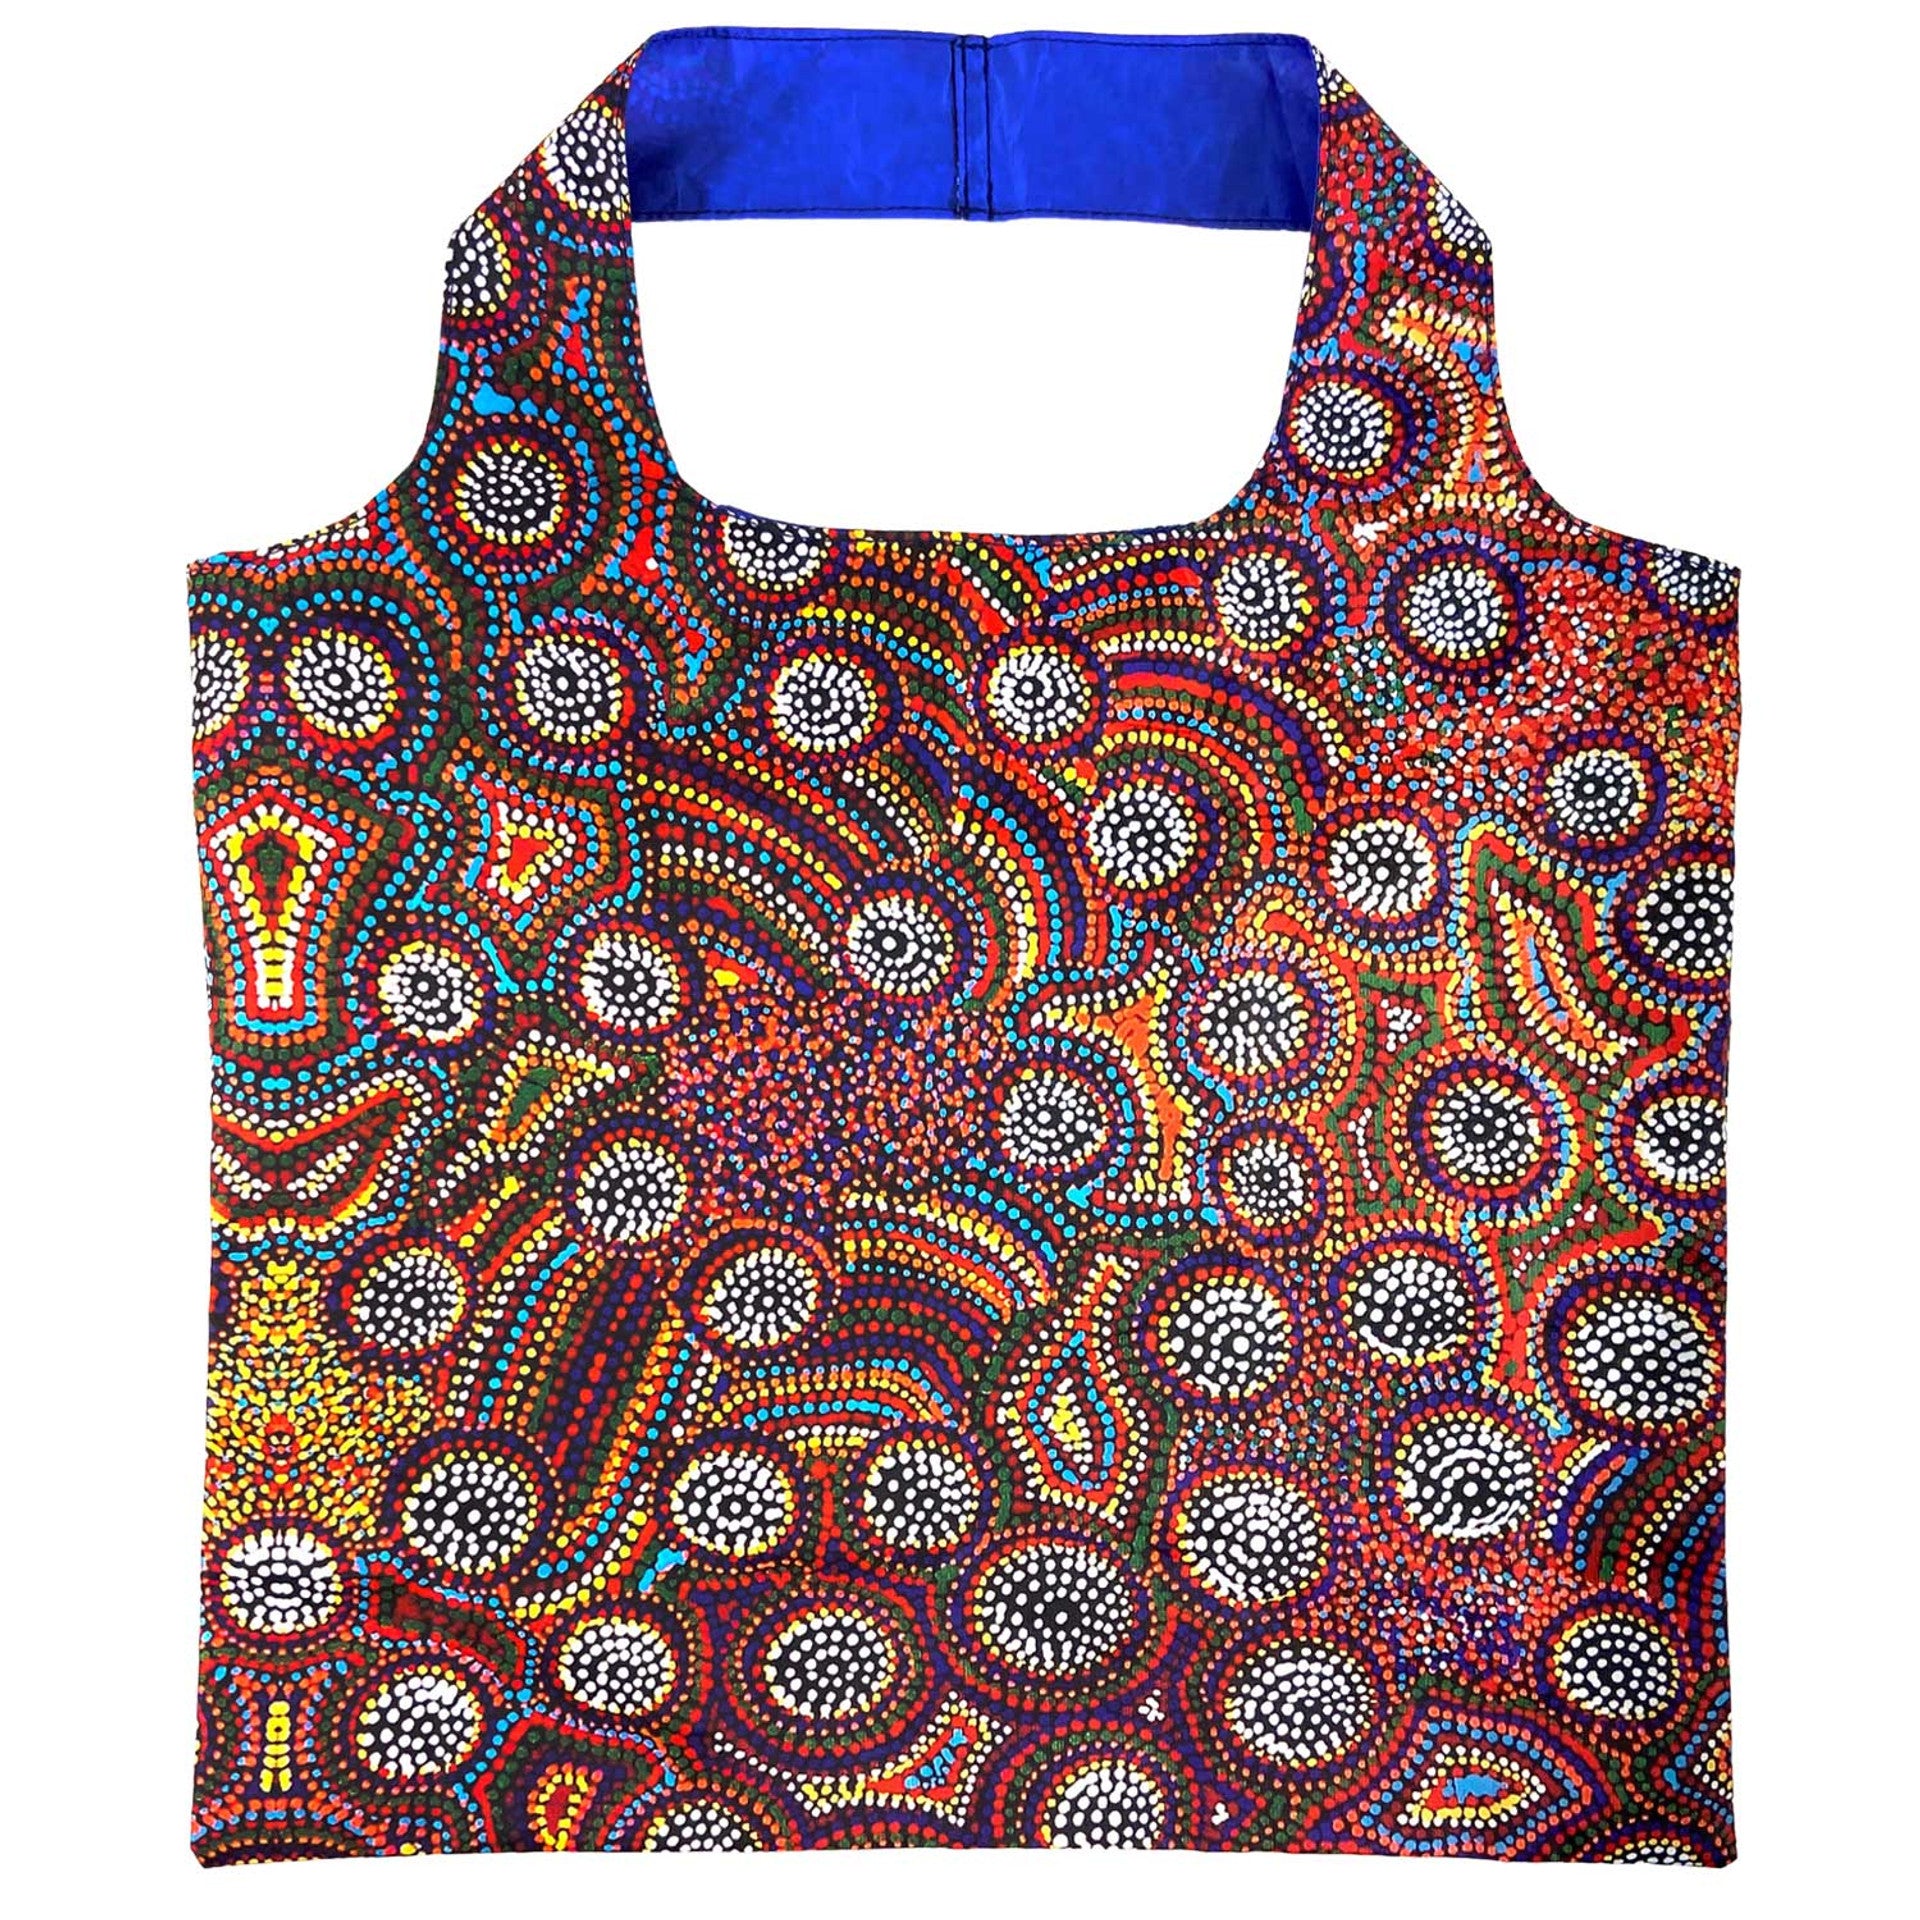 Foldable Shopping Bag (Recycled) - Janie Petyarre Morgan